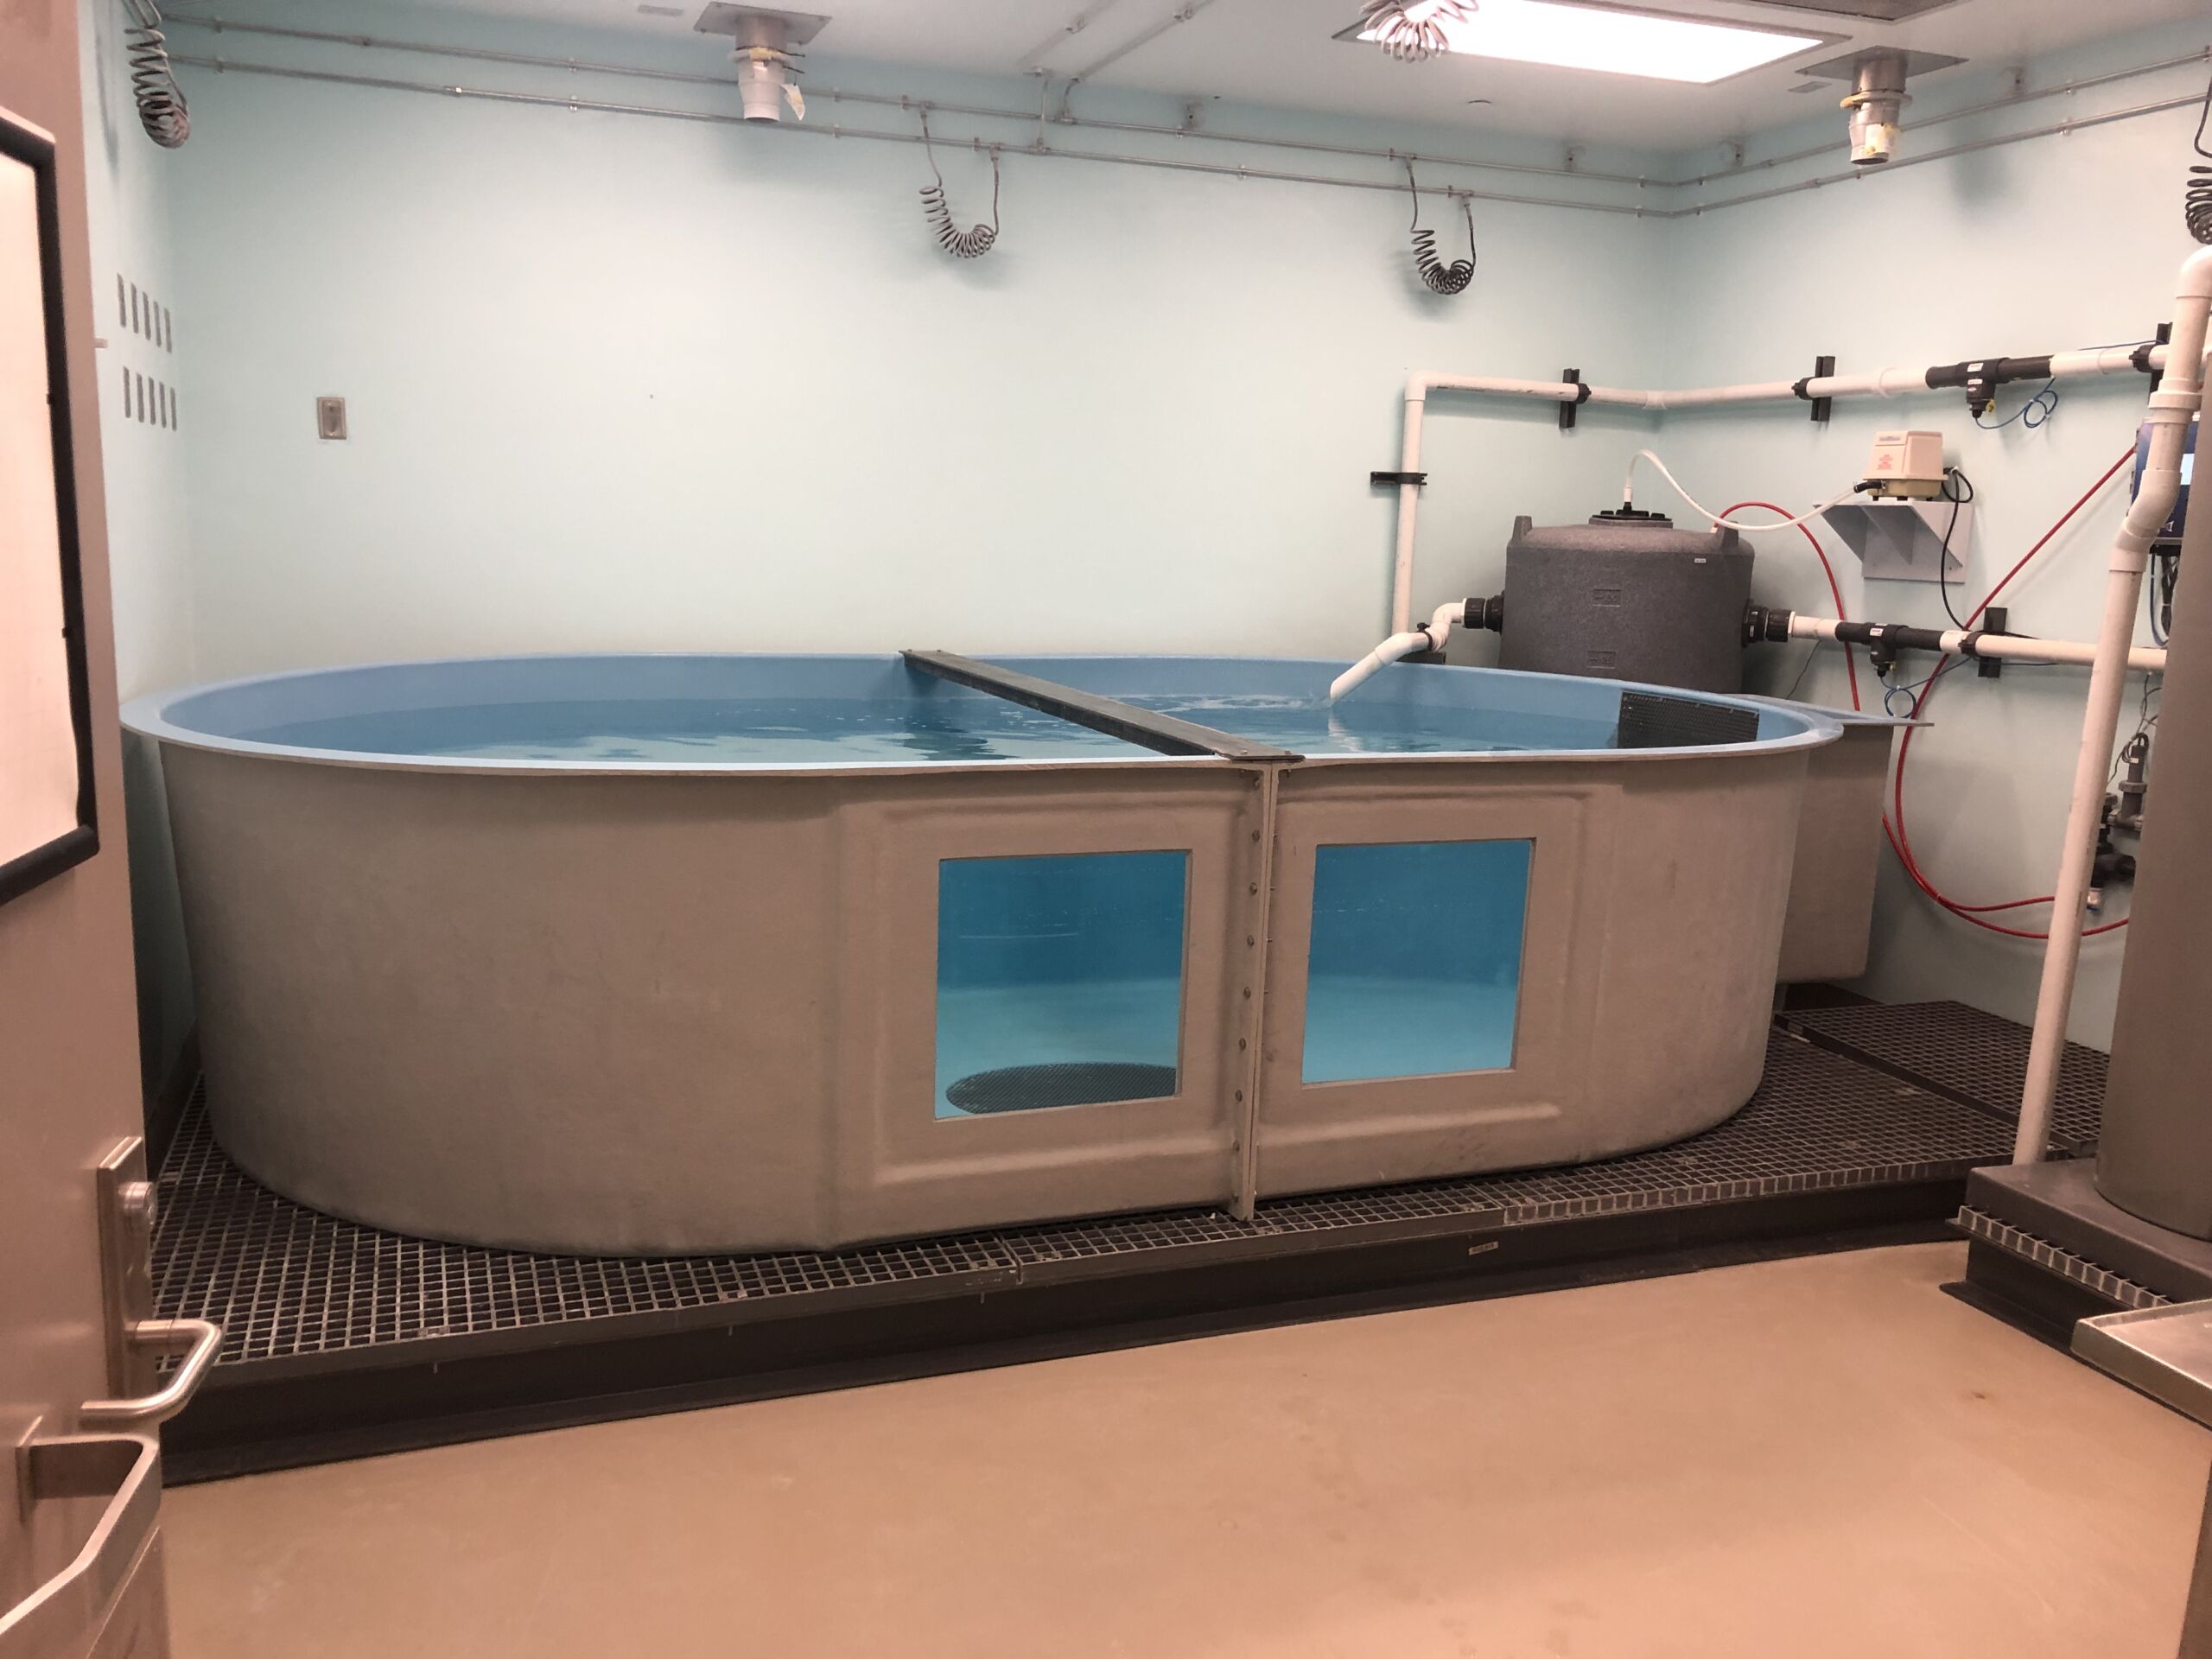 Shark Aquatic Tank + System